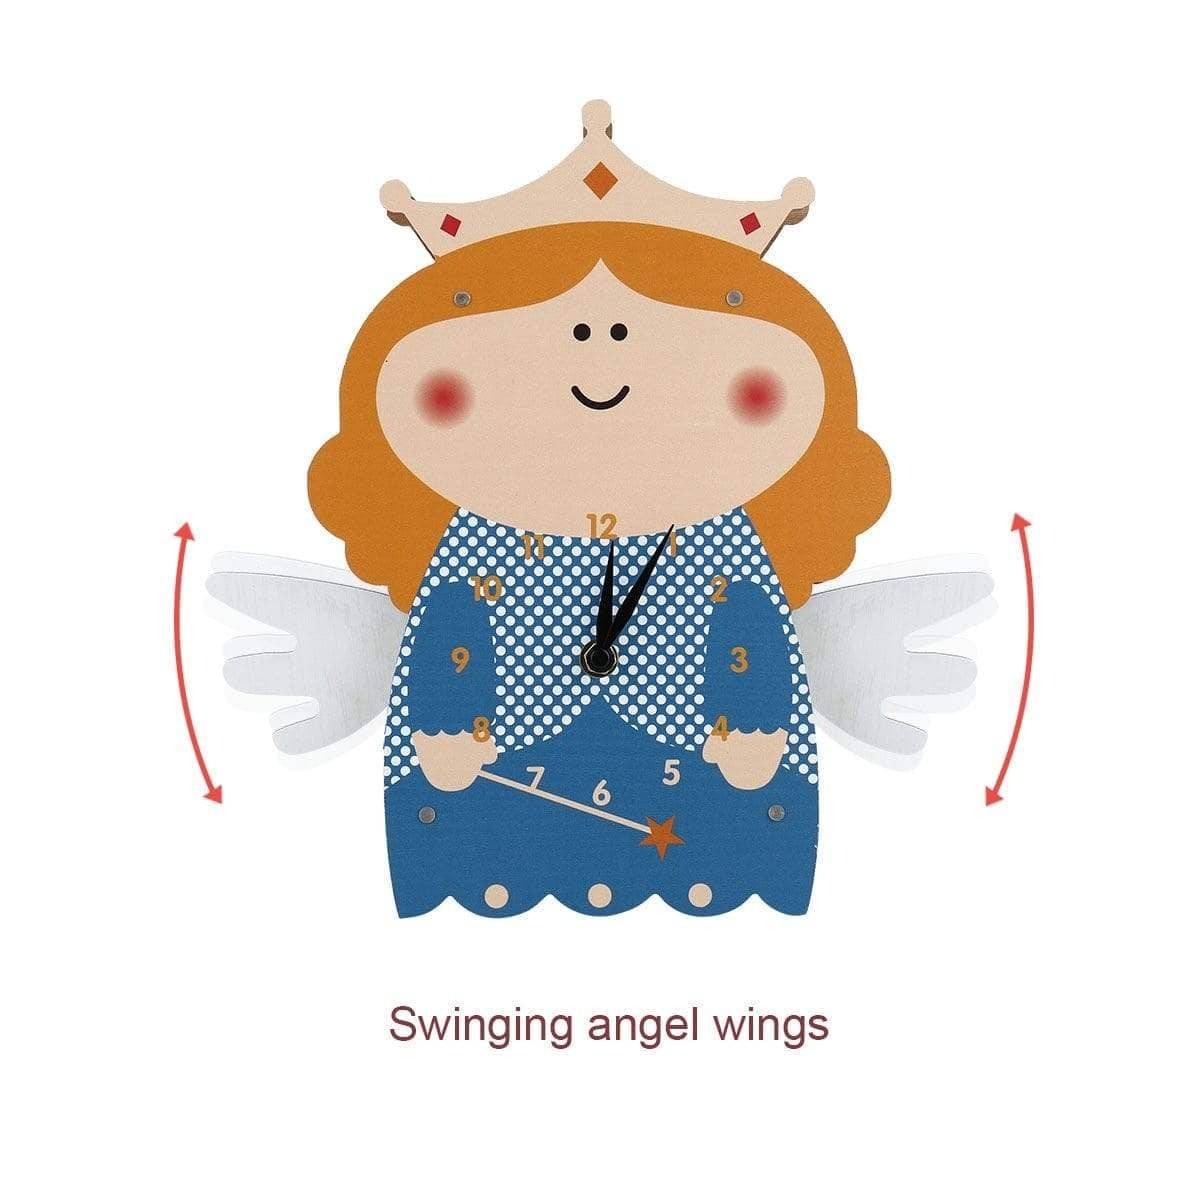 Swinging Angel Kids Bedroom Wall Clocks: Fun and Whimsical Decor